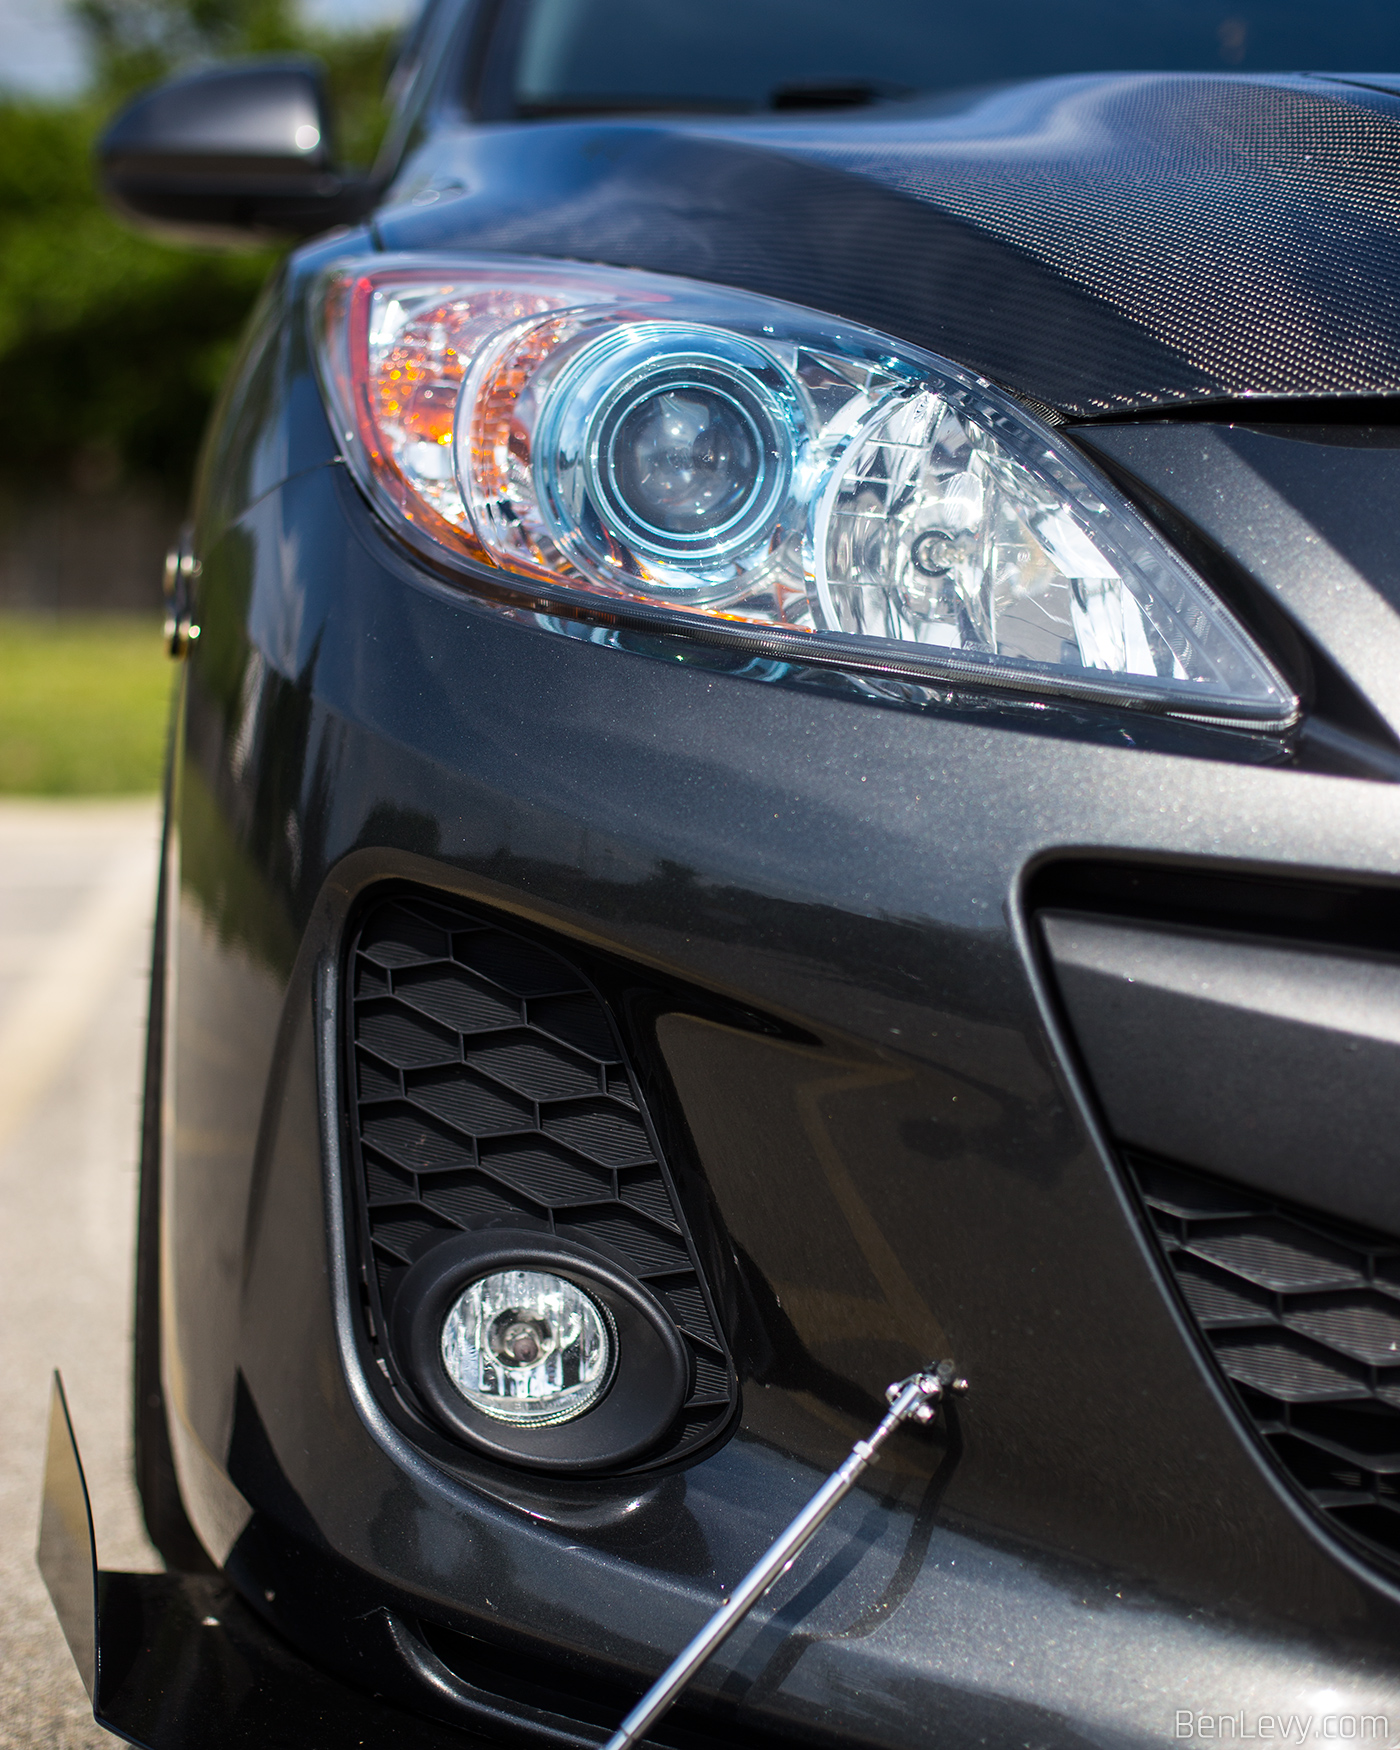 Headlight on Skyactiv Mazda3